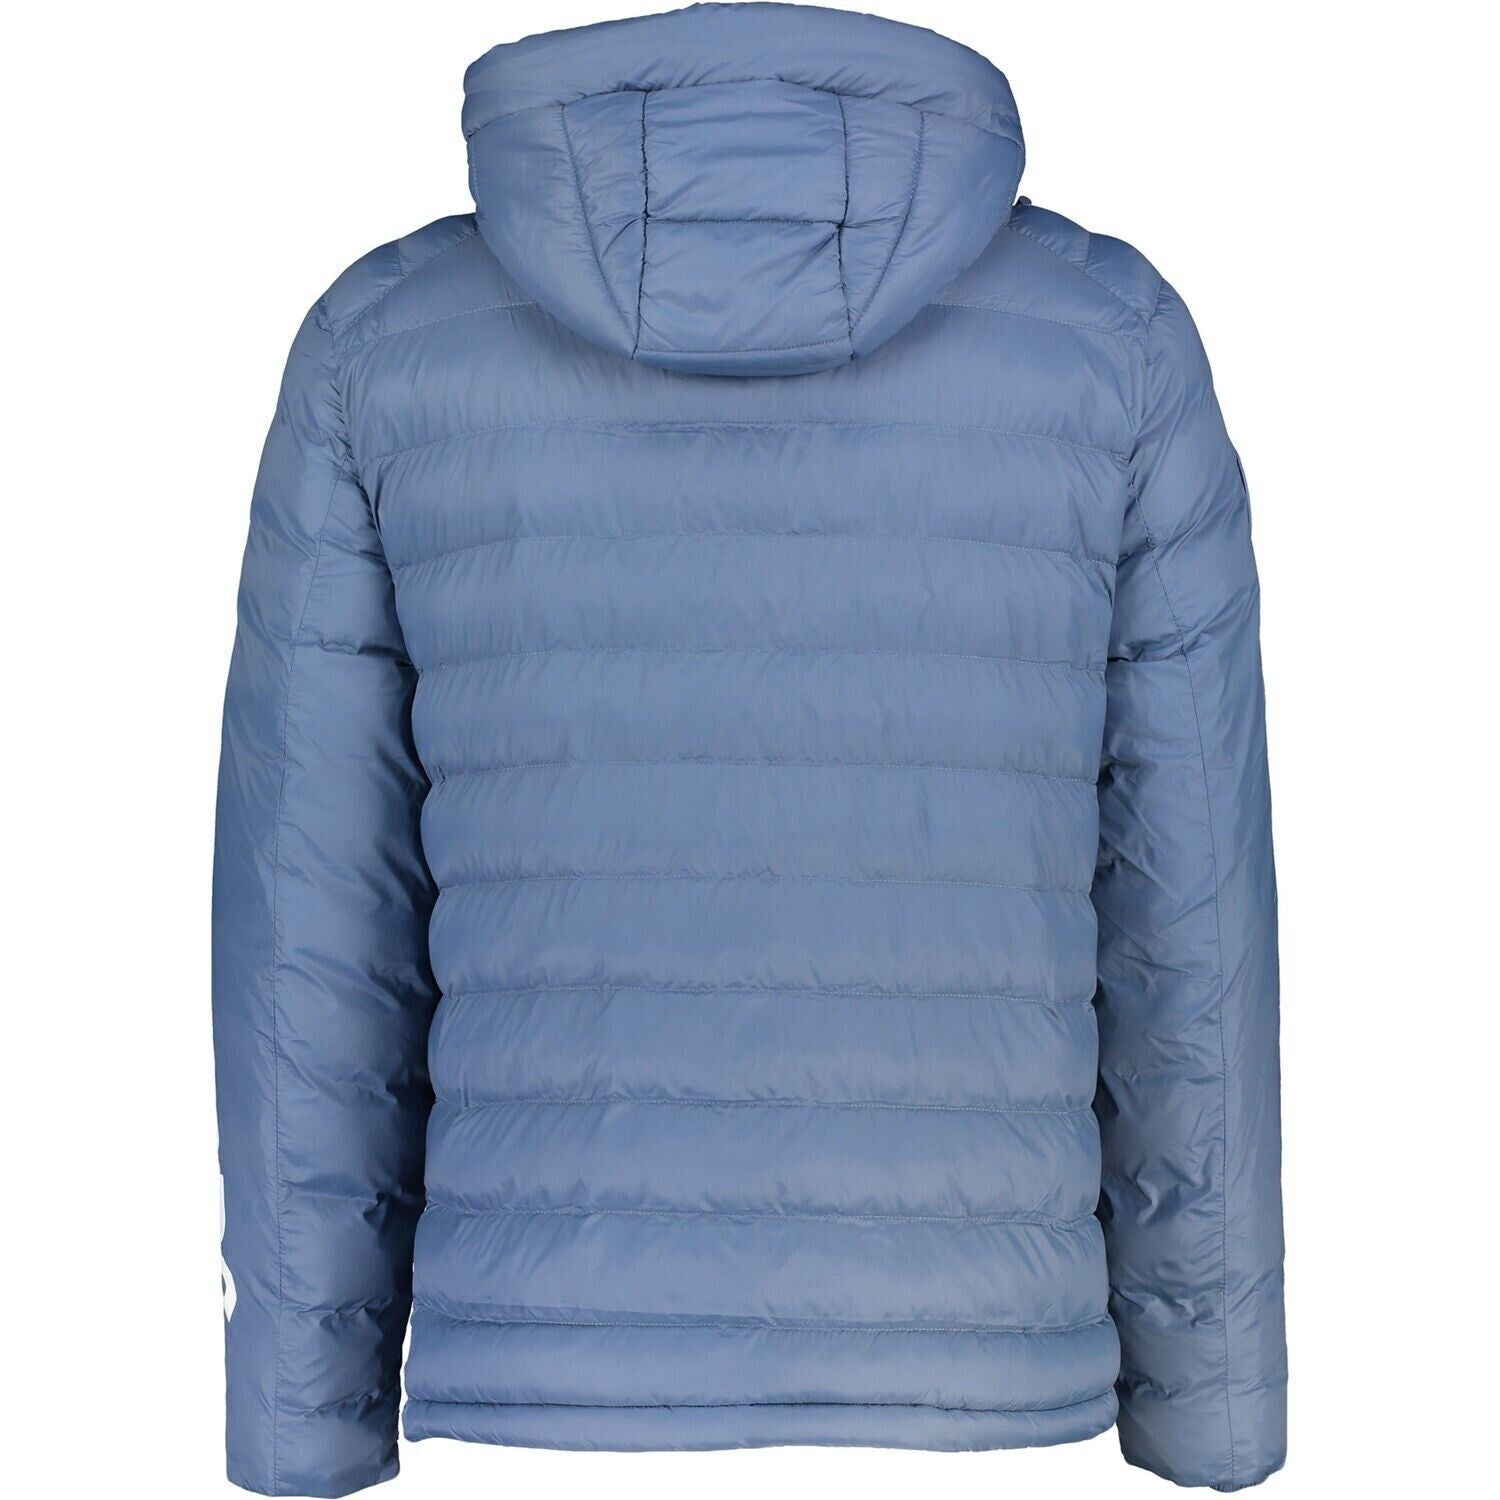 MICHAEL KORS Men's Lightly Padded Hooded Wind-proof Jacket, Blue, size LARGE